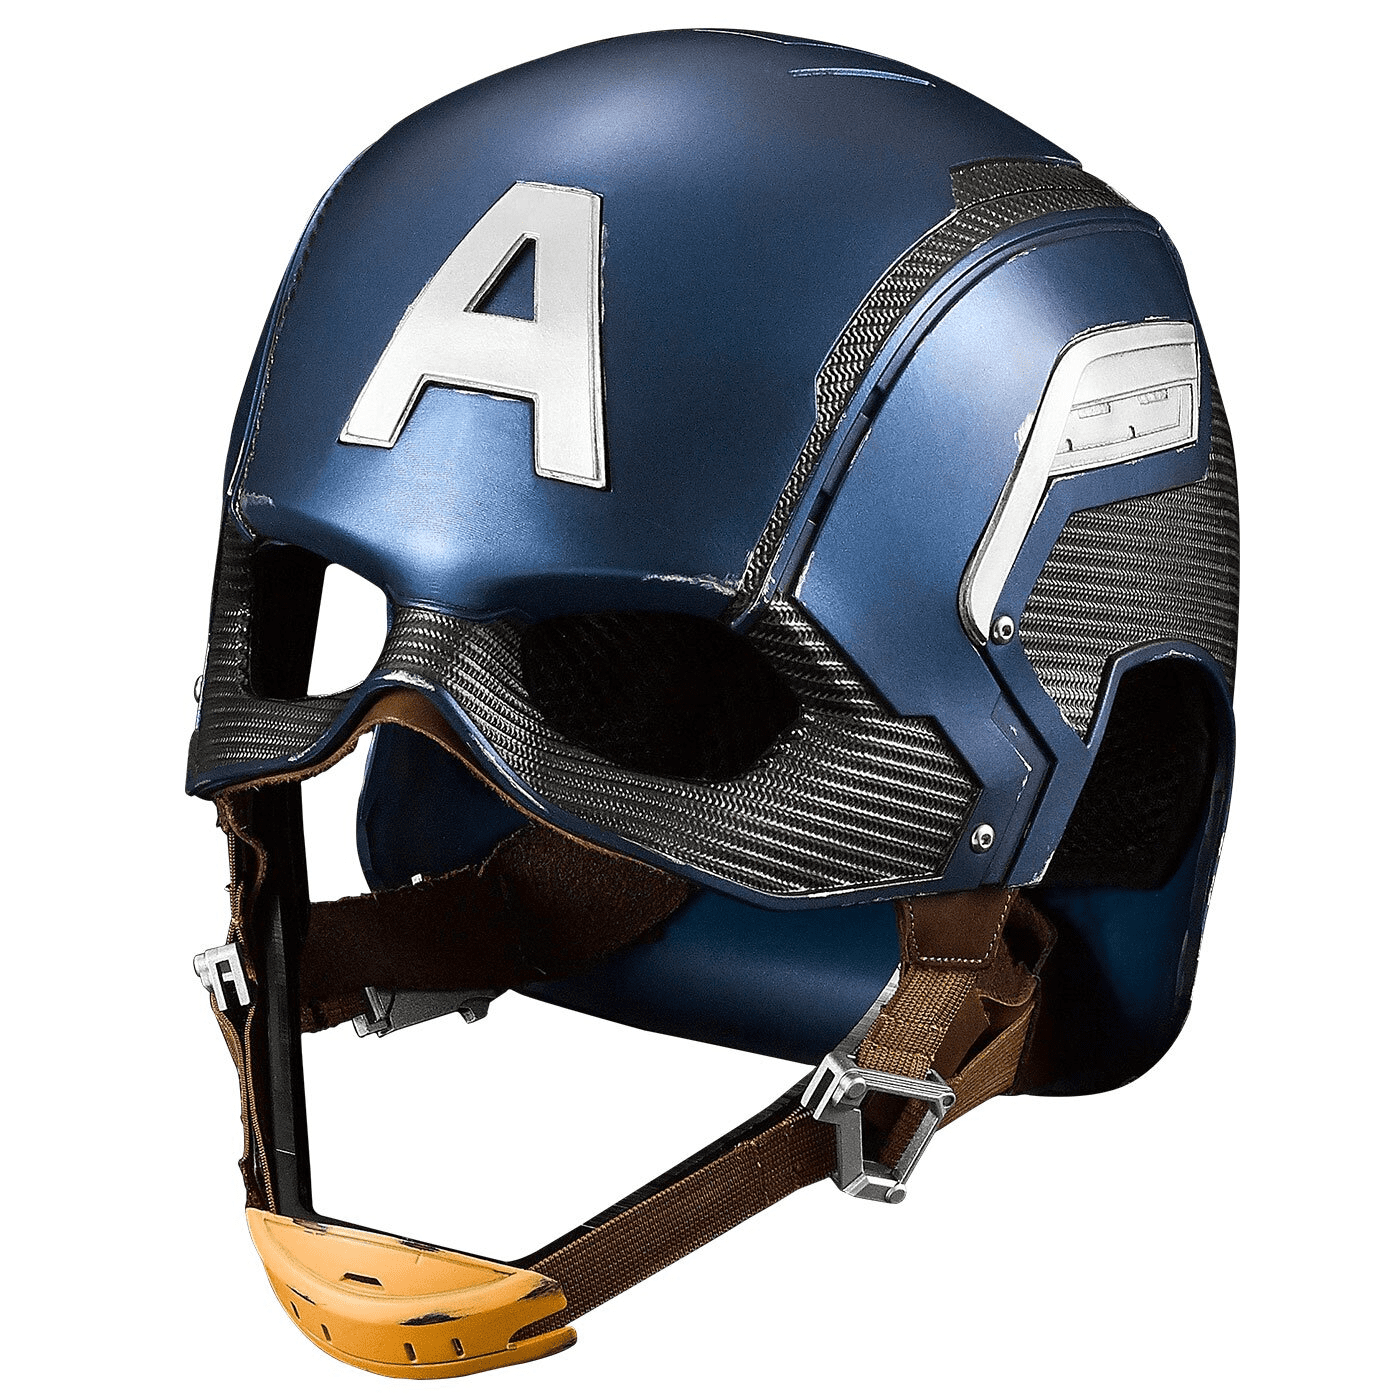 Captain America Mask 1:1 Wearable Helmet Original Film Size Collectible